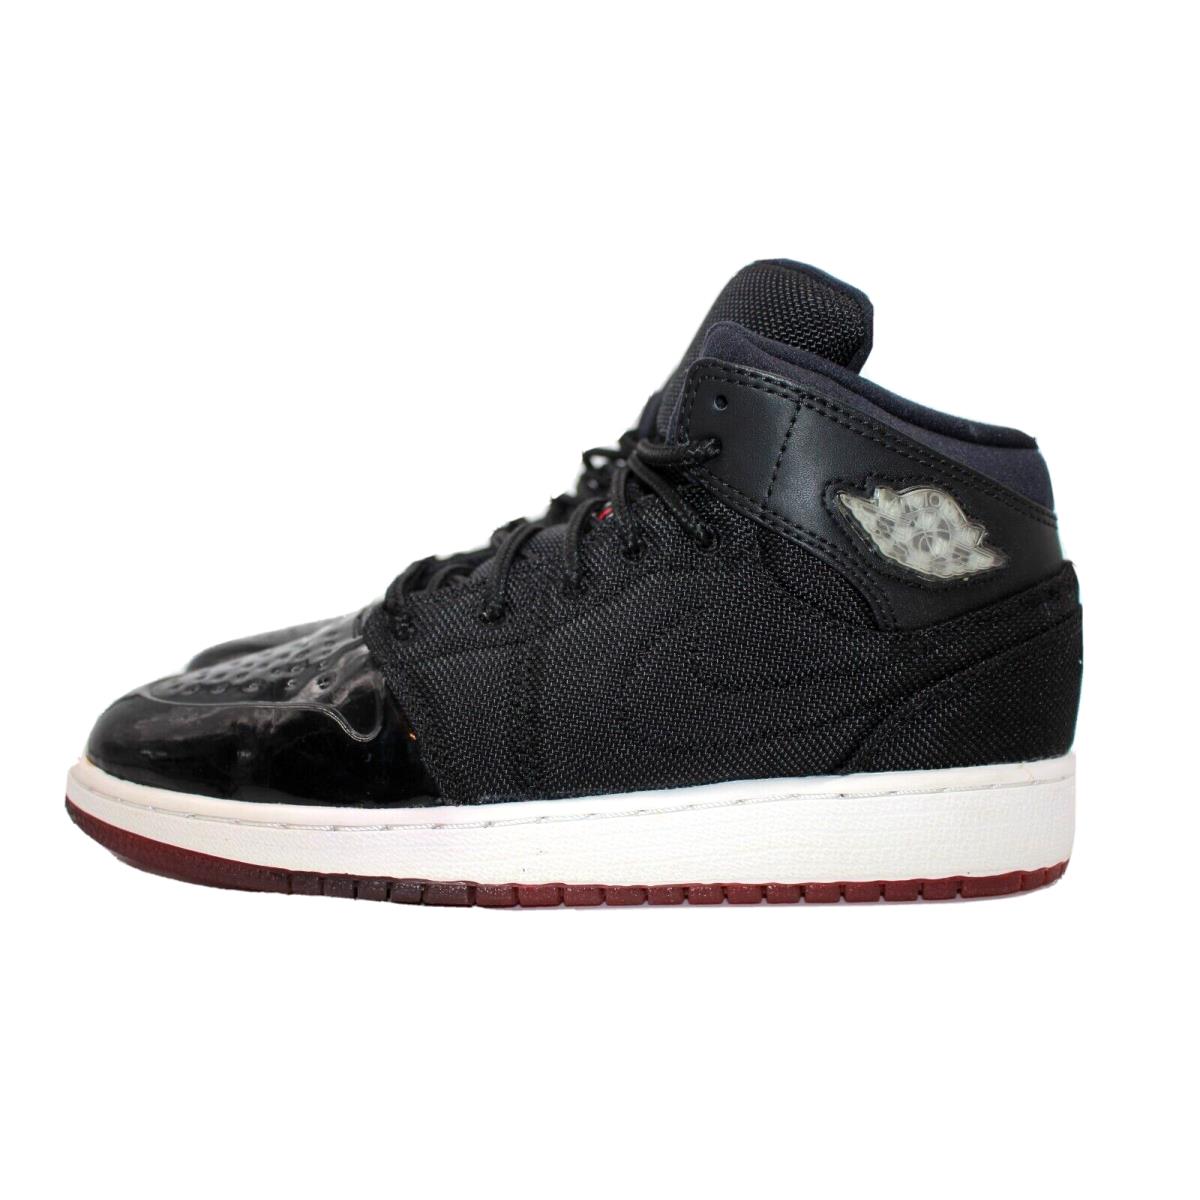 Nike Air Jordan 1 Retro 95` Txt Black Youth Athletic Shoes 616370-001 Size 6Y